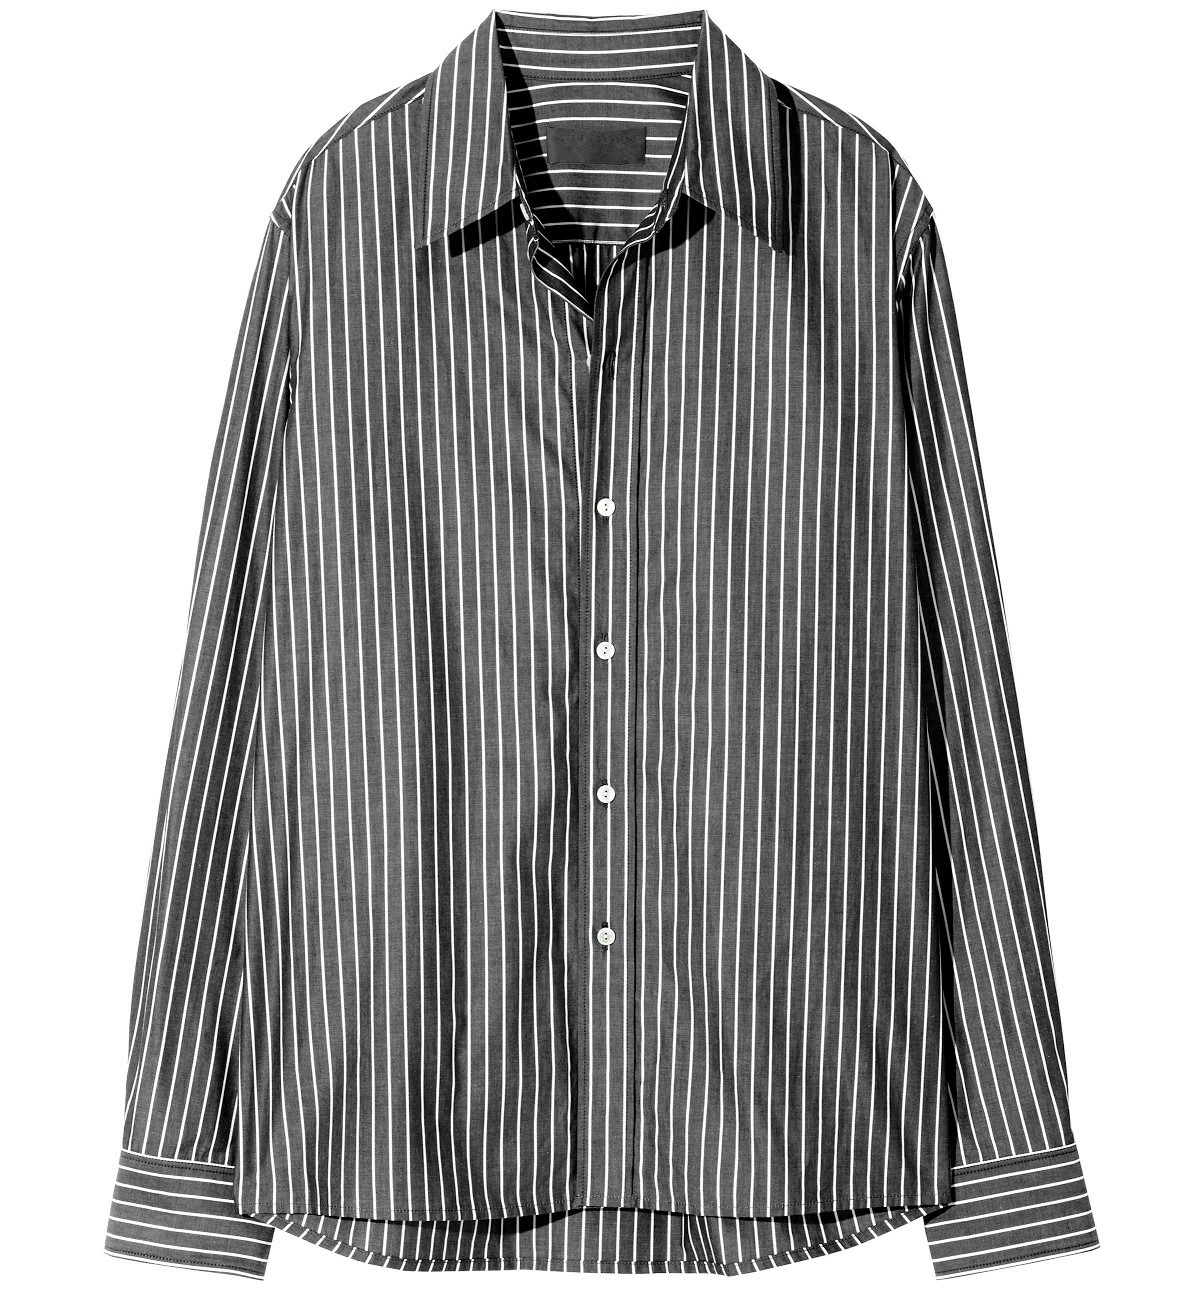 NILI LOTAN Raphael Classic Shirt in Black/White Stripe